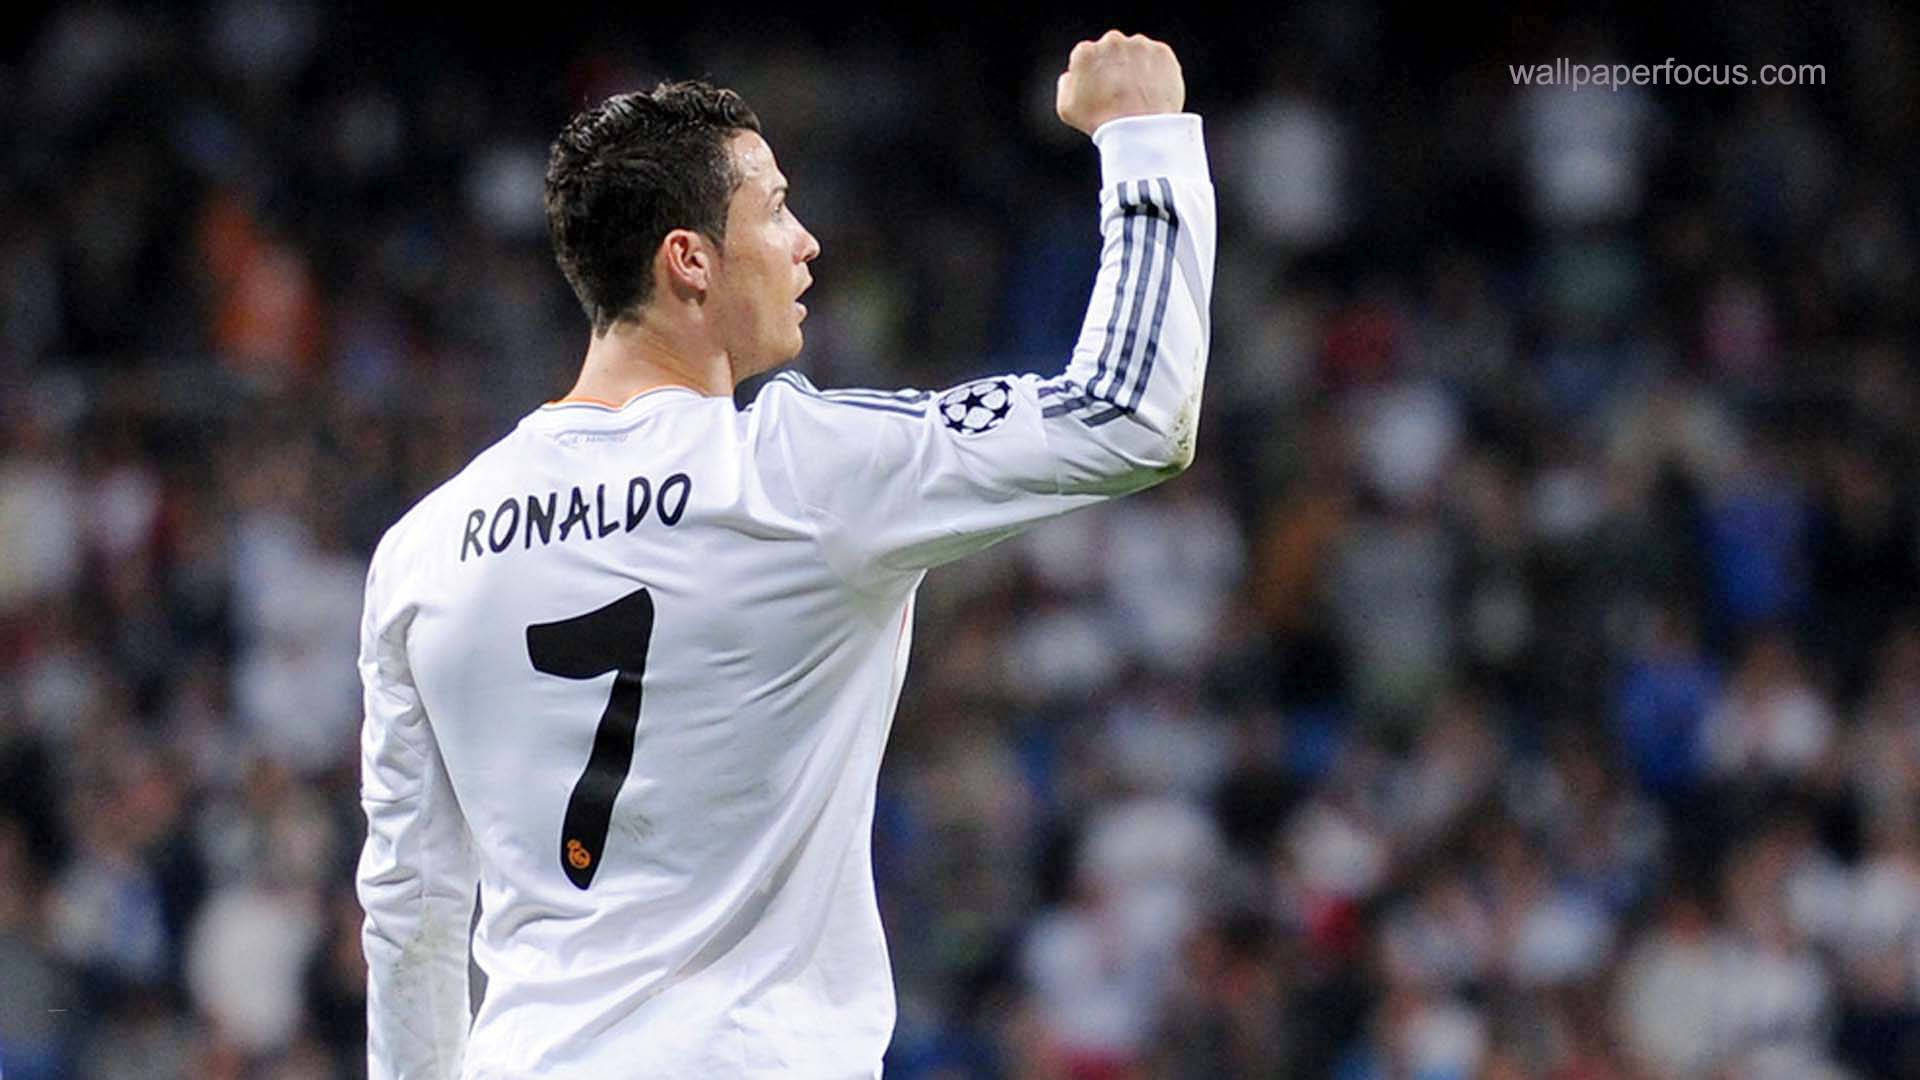 Cristiano Ronaldo celebrates a goal. Wallpaper